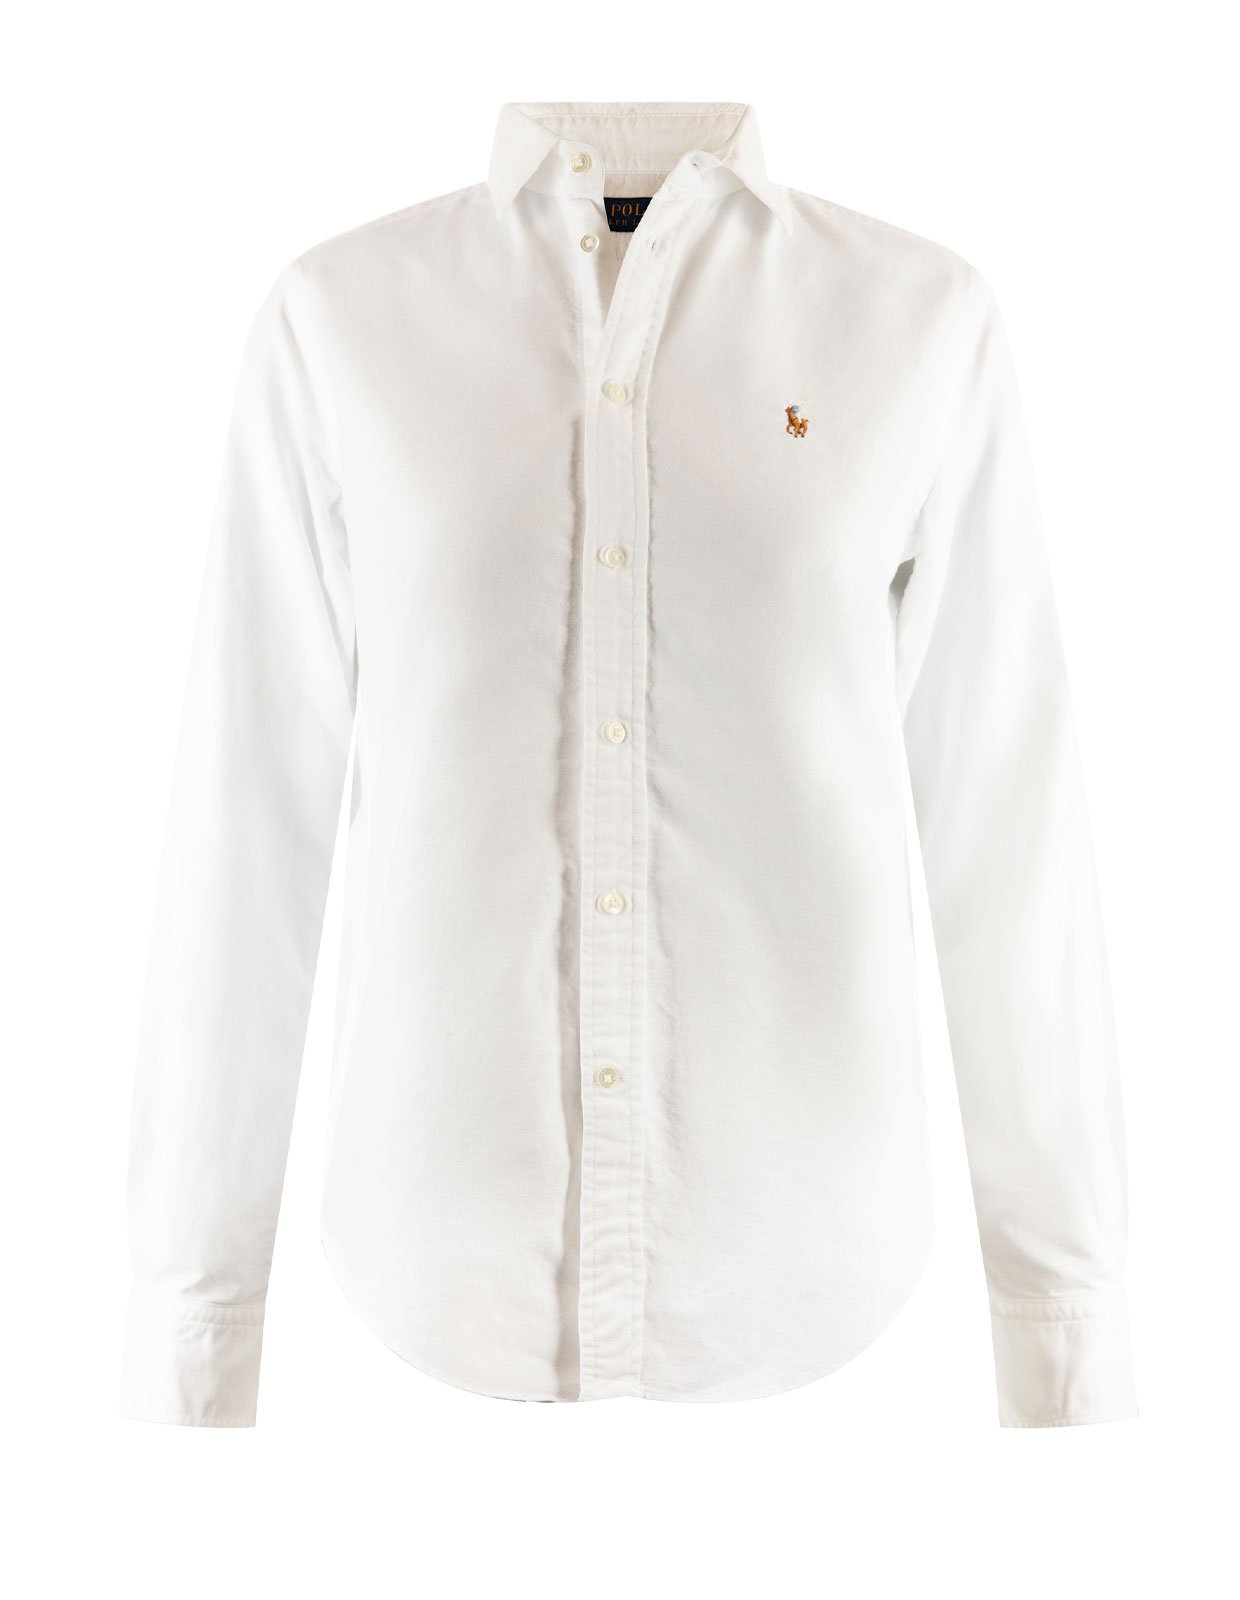 LS Oxford Shirt BSR White